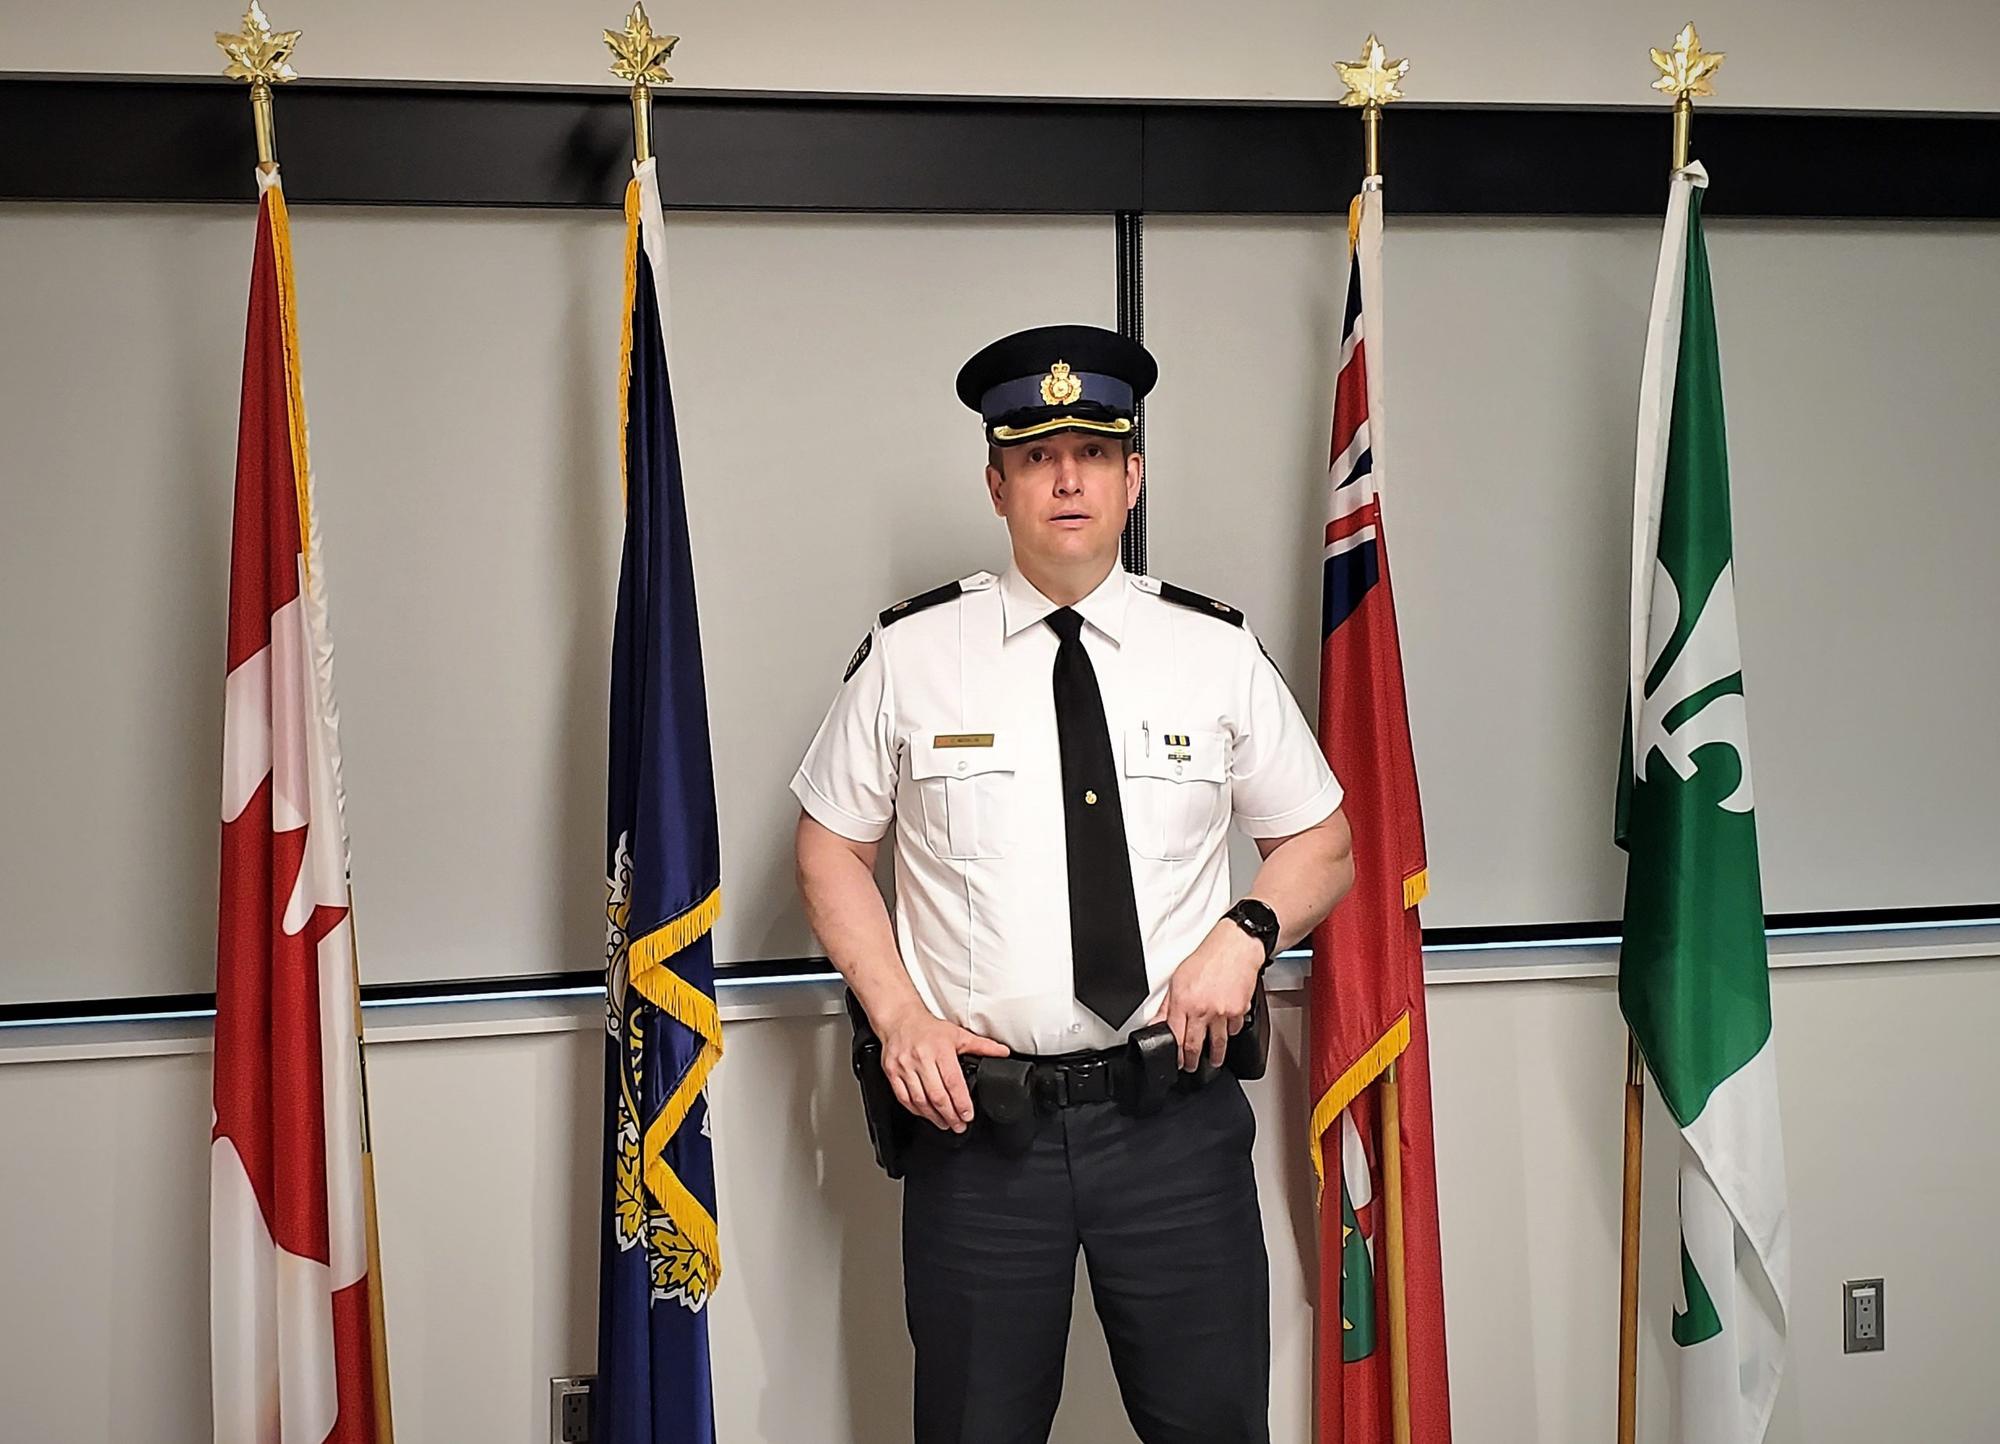 Inspector Chris McGillis named as new Commander of Hawkesbury OPP Detachment